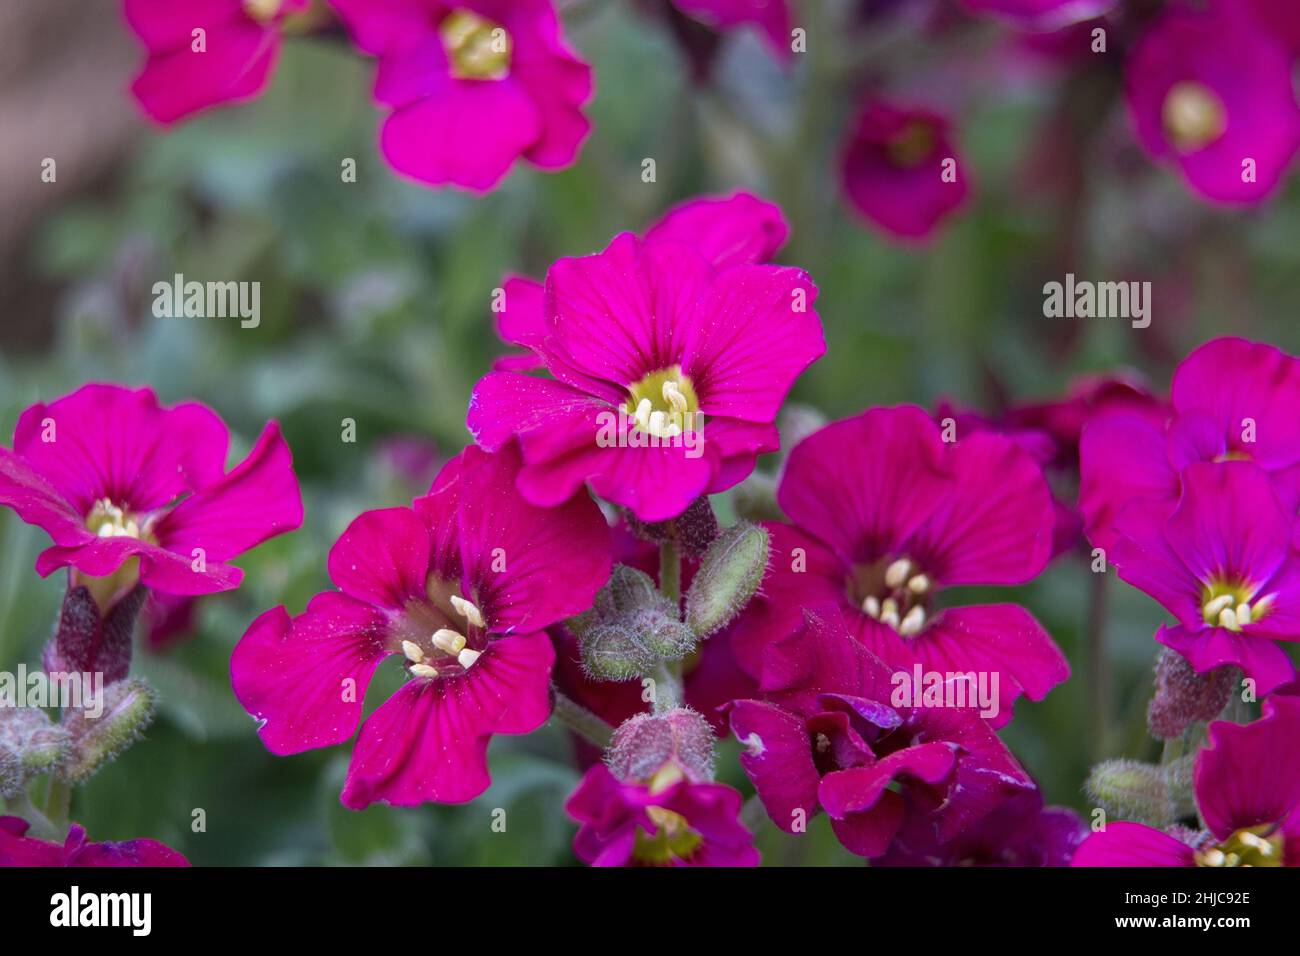 Dark pink Aubretia flowers, Aubrieta Gloria, flowering in a rock garden in summertime, close-up view Stock Photo